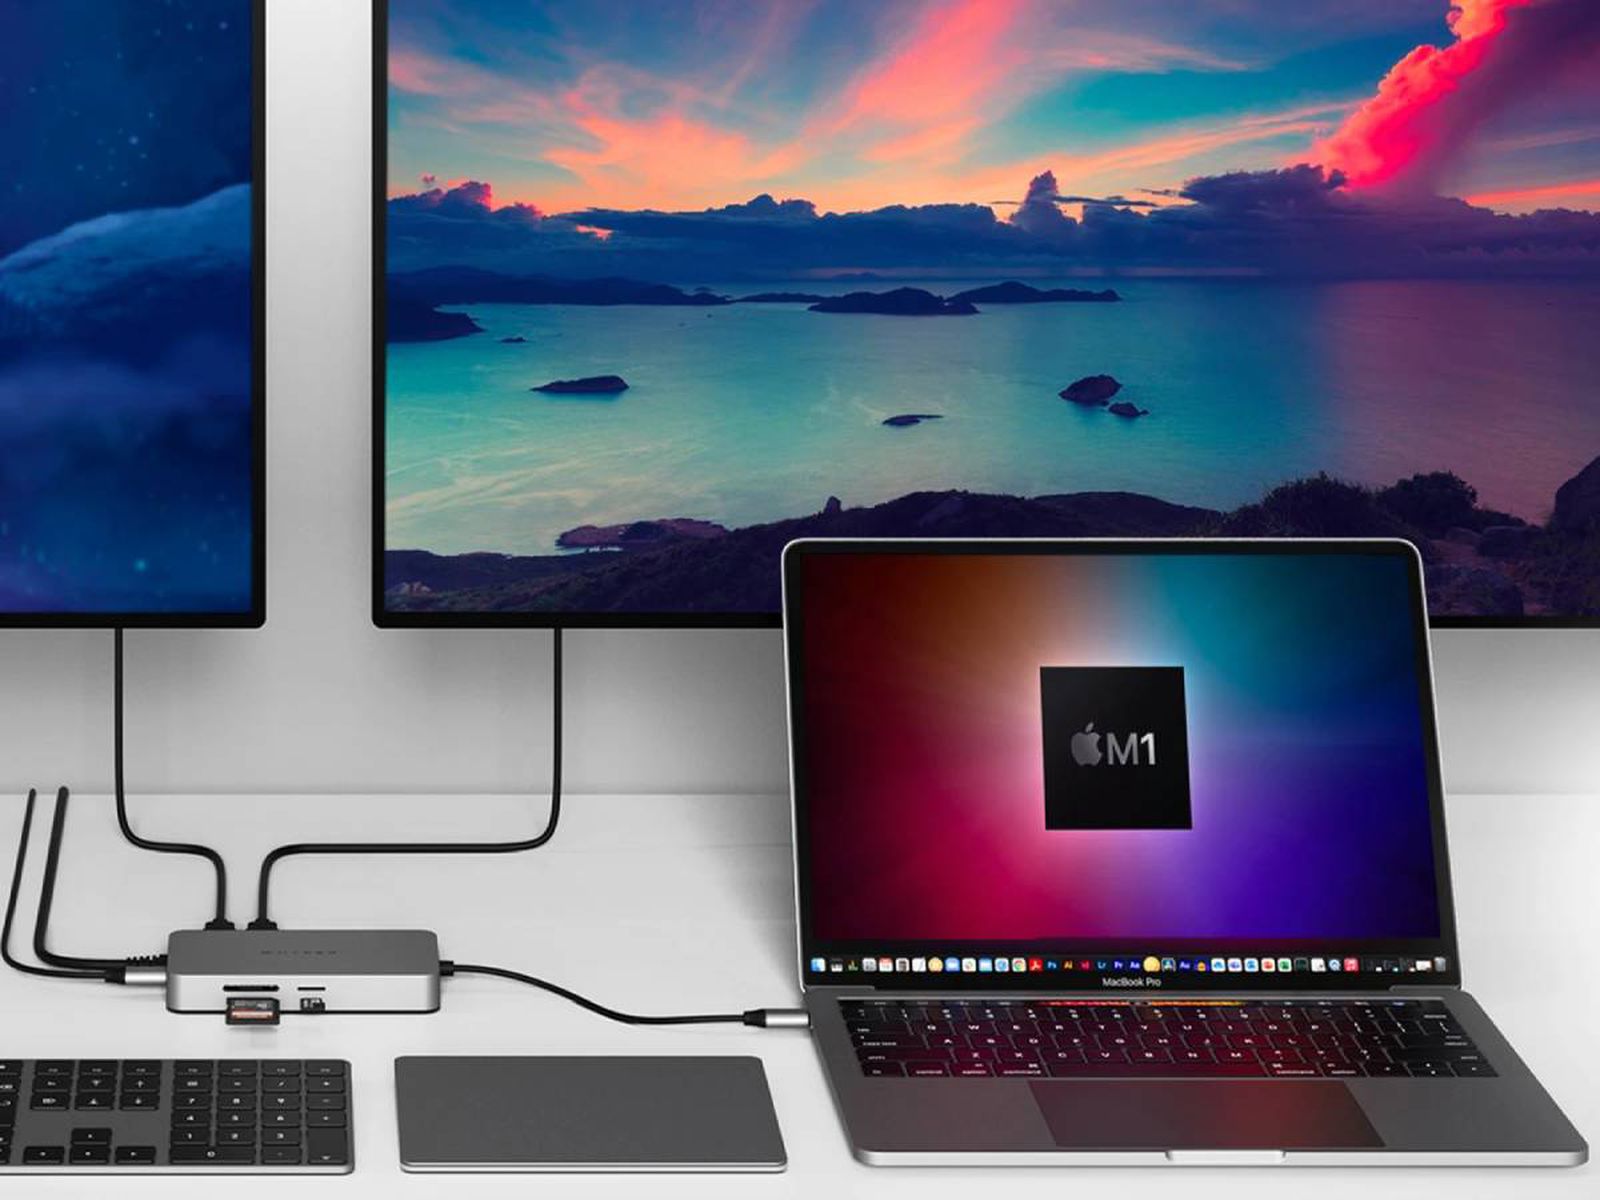 M1 Max MacBook and Xbox share killer ultra-wide display [Setups]